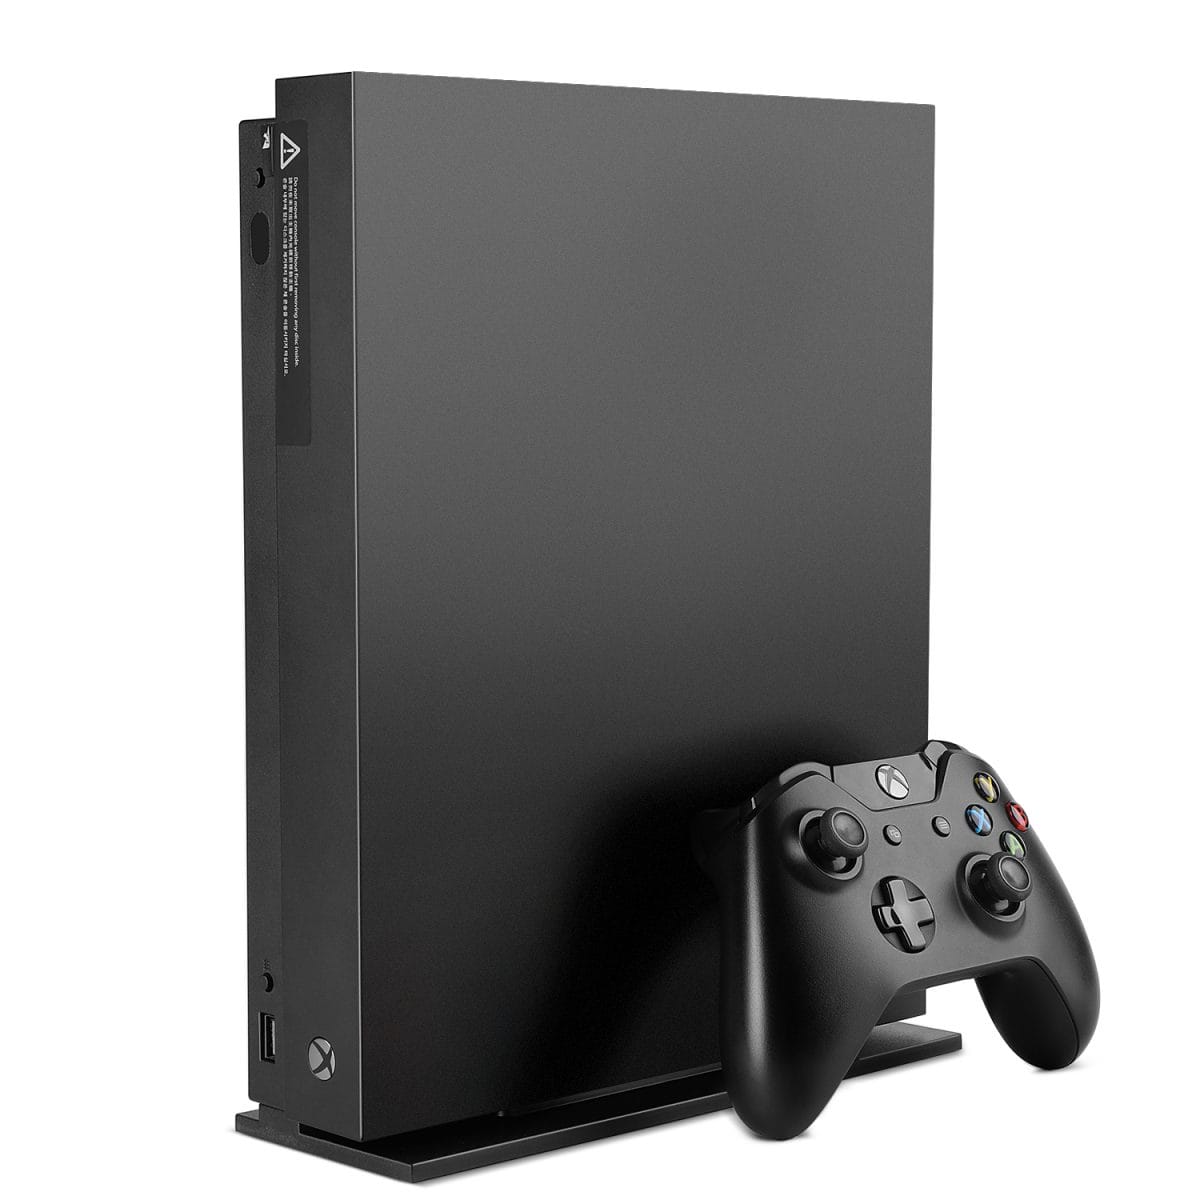 Xbox One X 1TB, 4K Ultra HD Gaming Console, Black